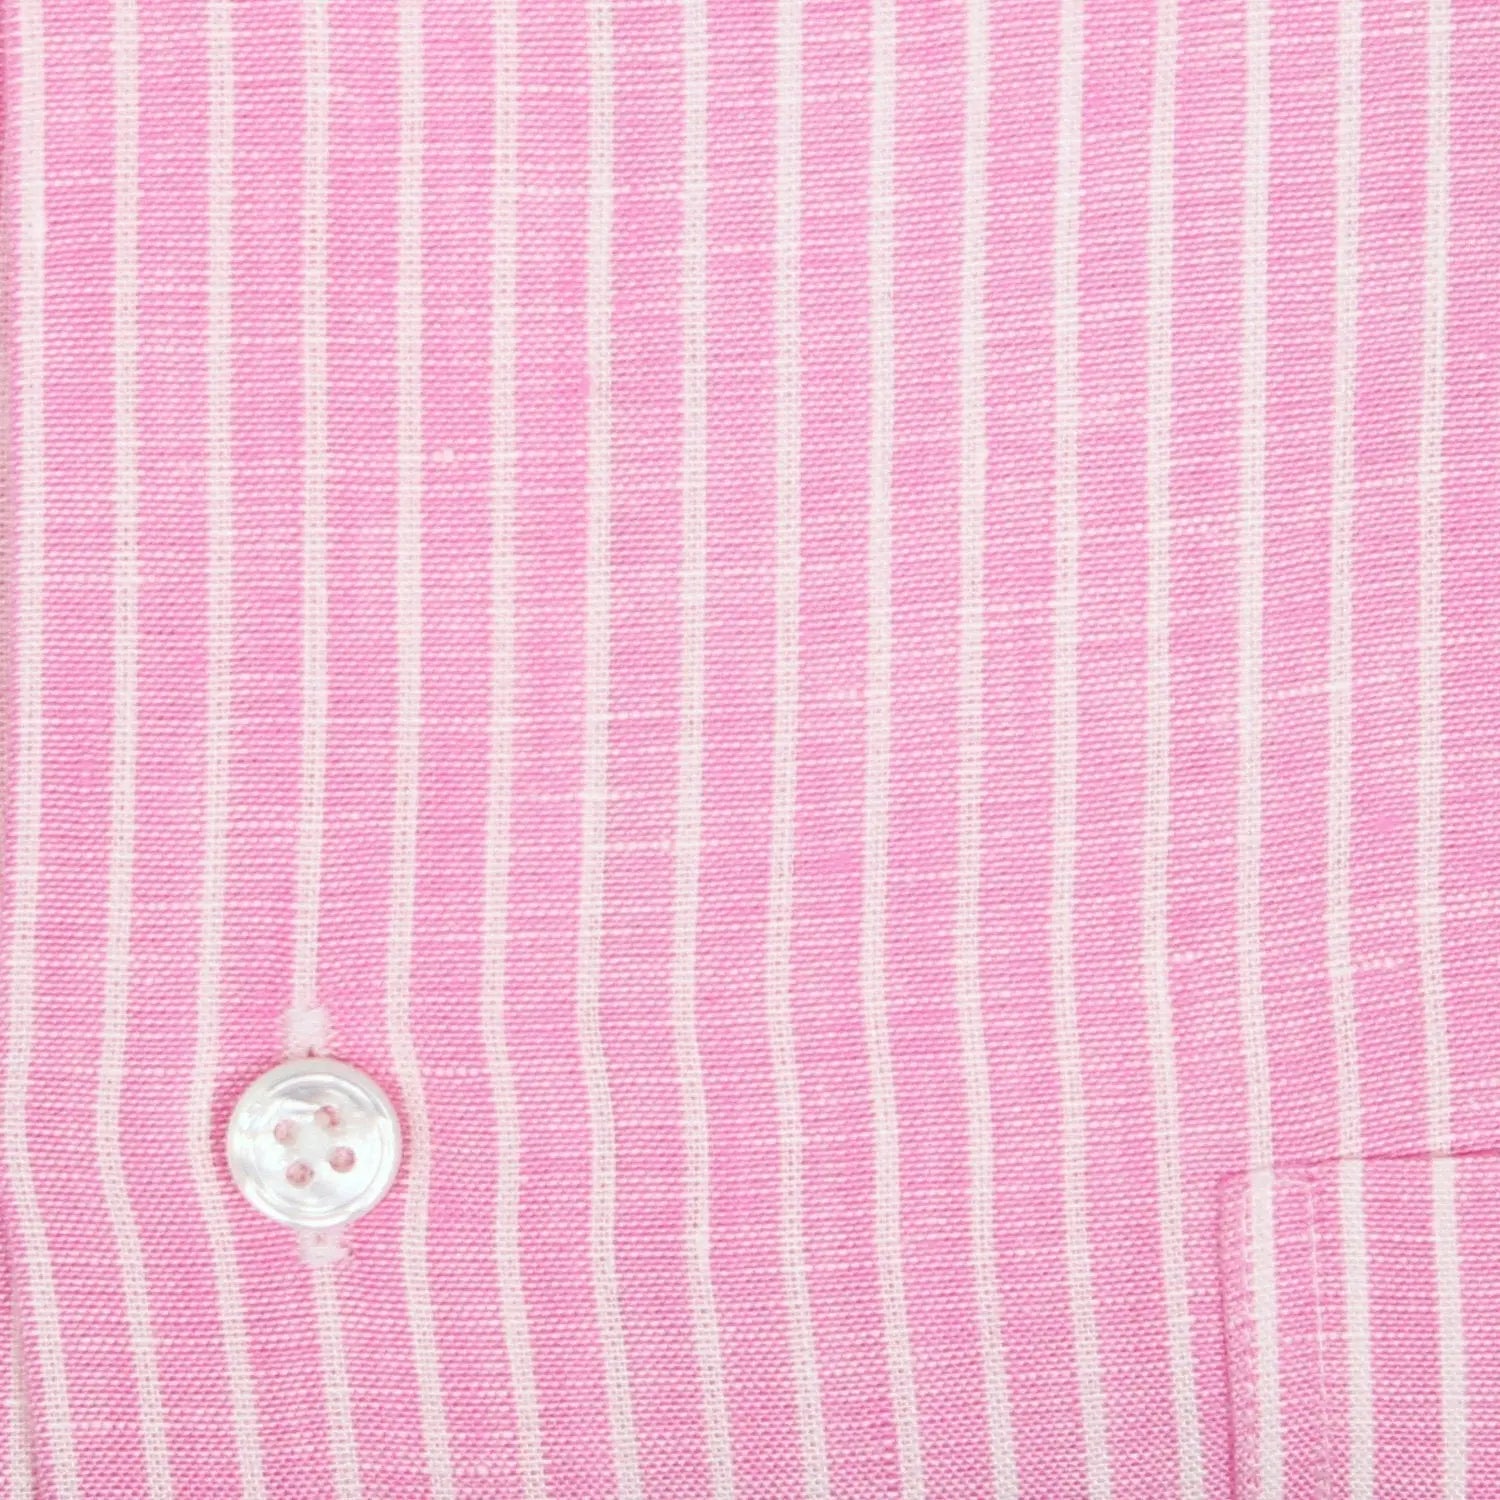 Pink &amp; White Stripe Linen Short Sleeve Shirt  Robert Old   